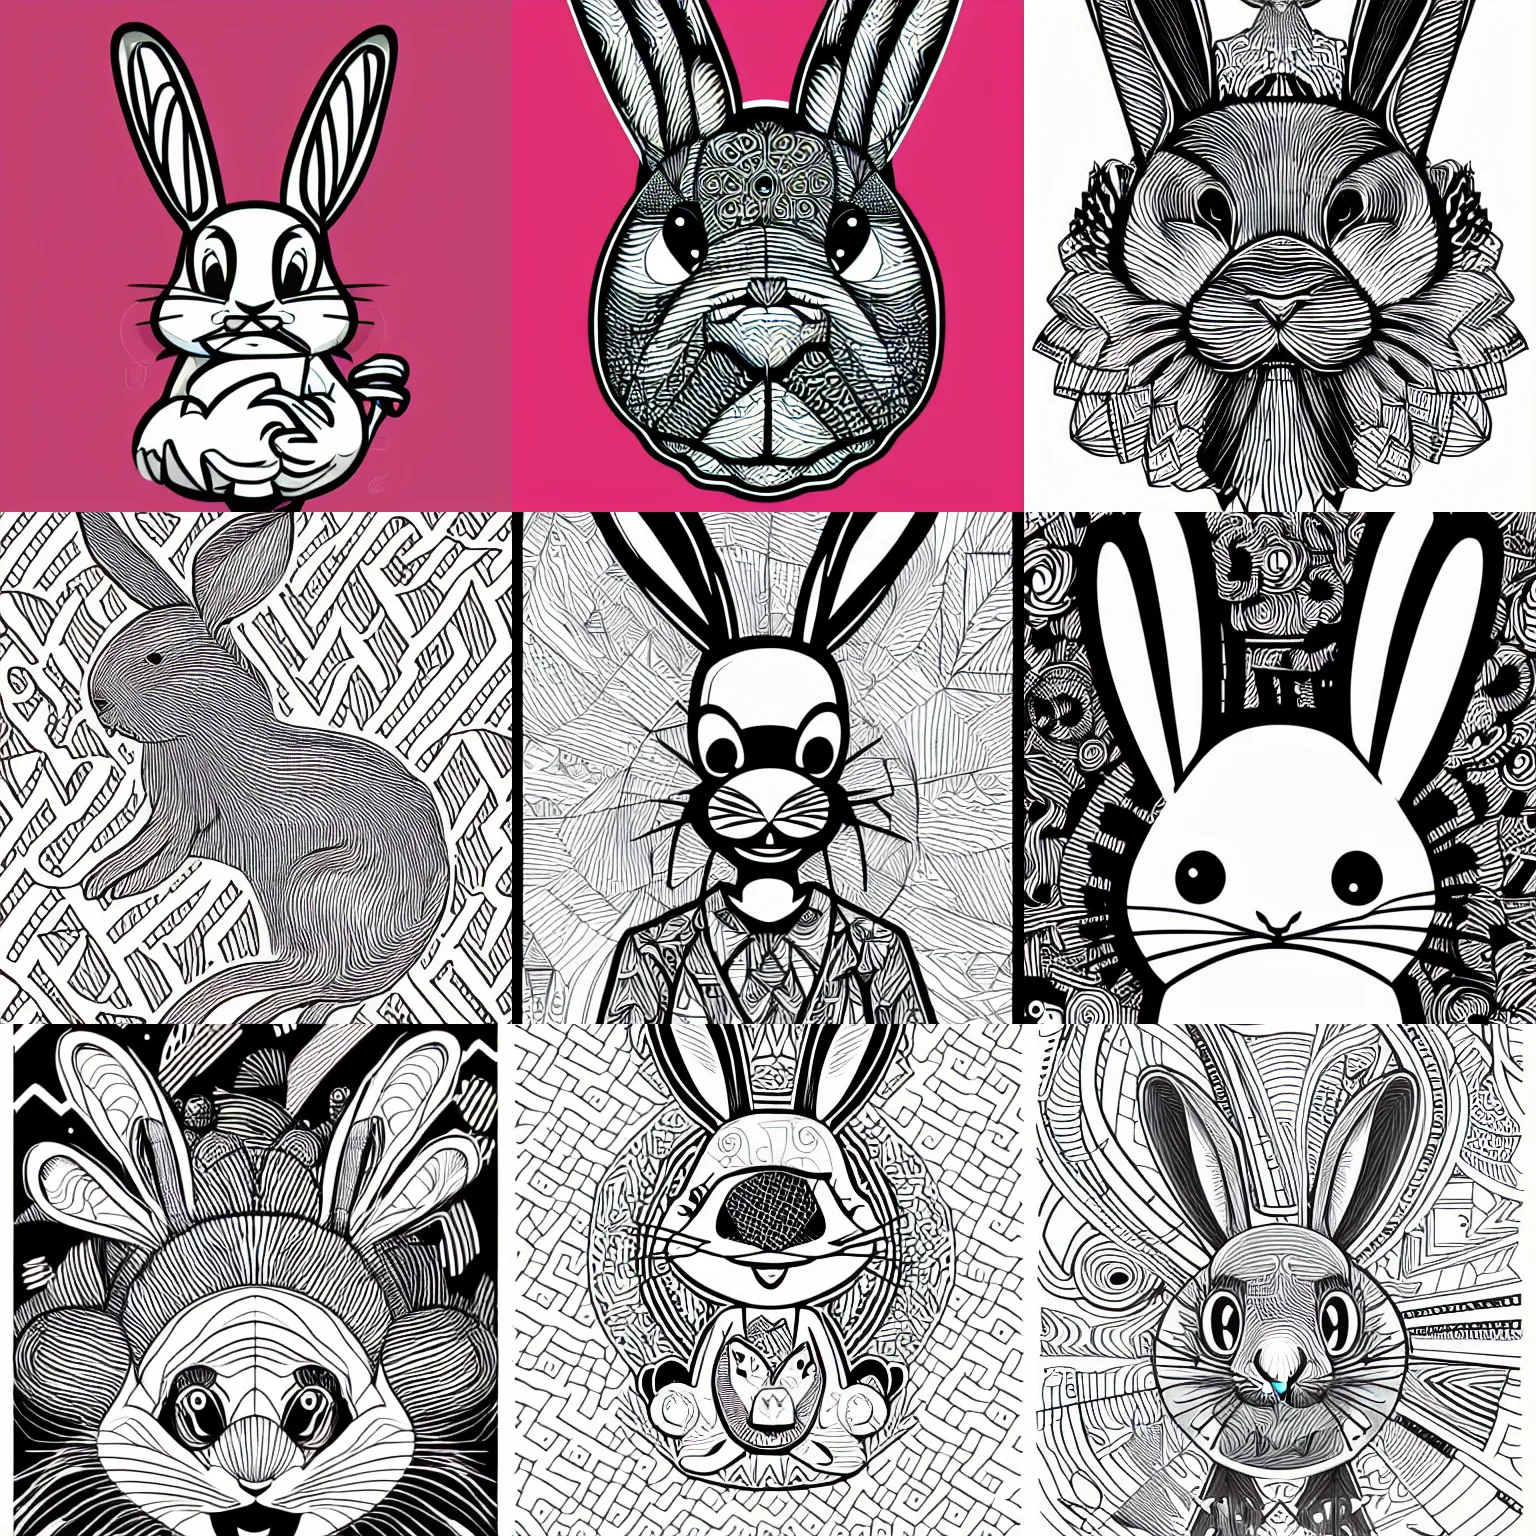 Prompt: line art crazy rabbit vector illustration, bold lines, svg, sharp focus, mcbess, behance, devianart, artstation, dribble, creary, ello, cgsociety, drawcrowd, pixiv, concept art world, our art corner, newgrounds, doodle addicts, penup